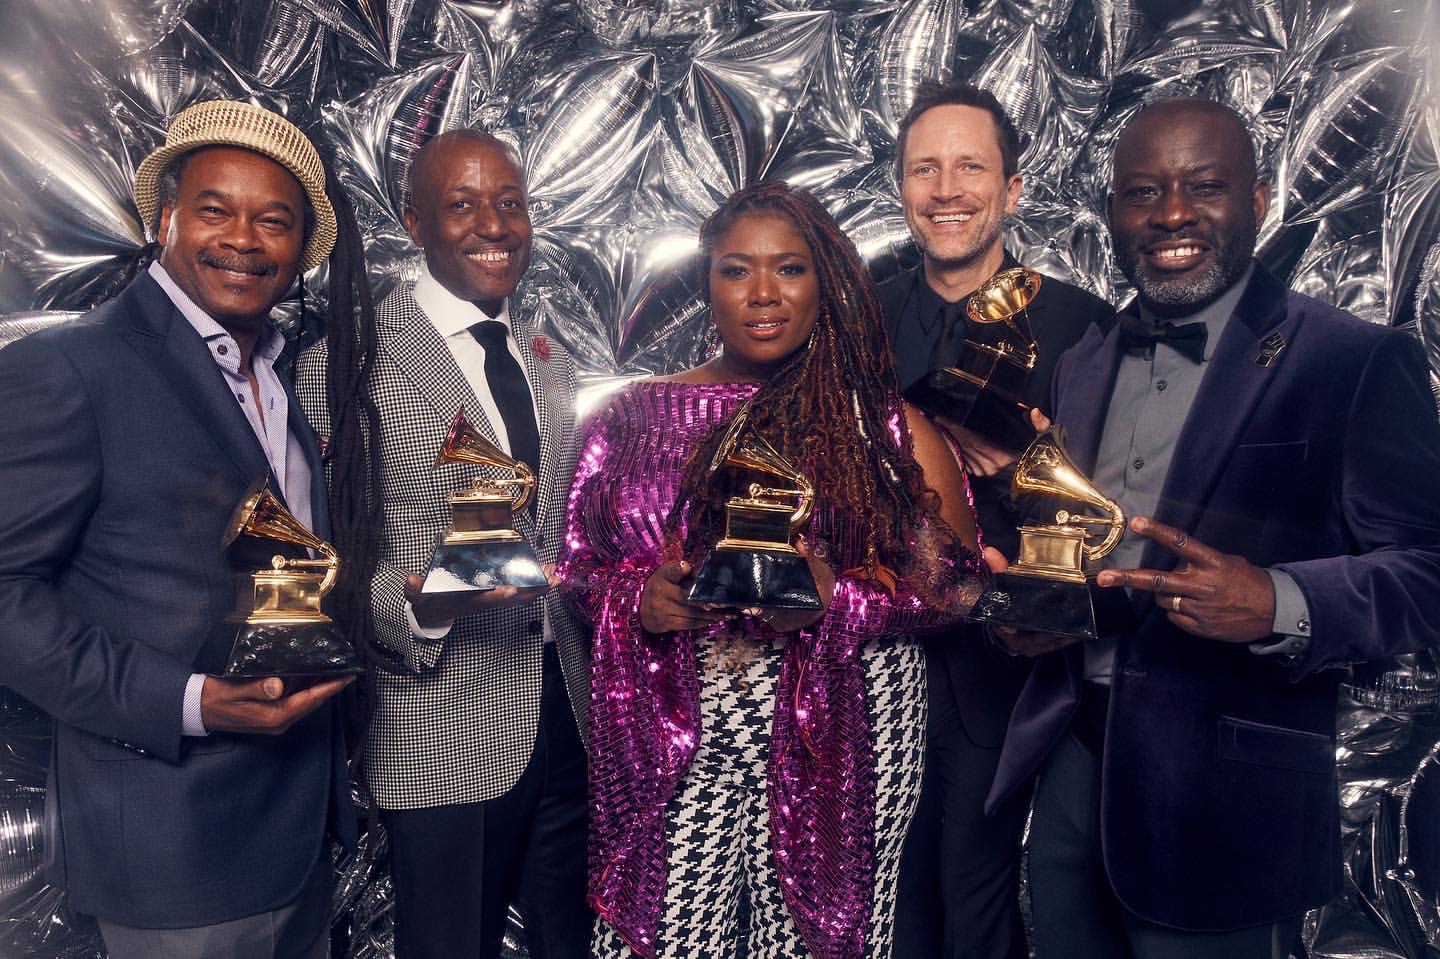 KUDOS Ranky Tanky, Grammy Award Winners for Best Regional Roots Album